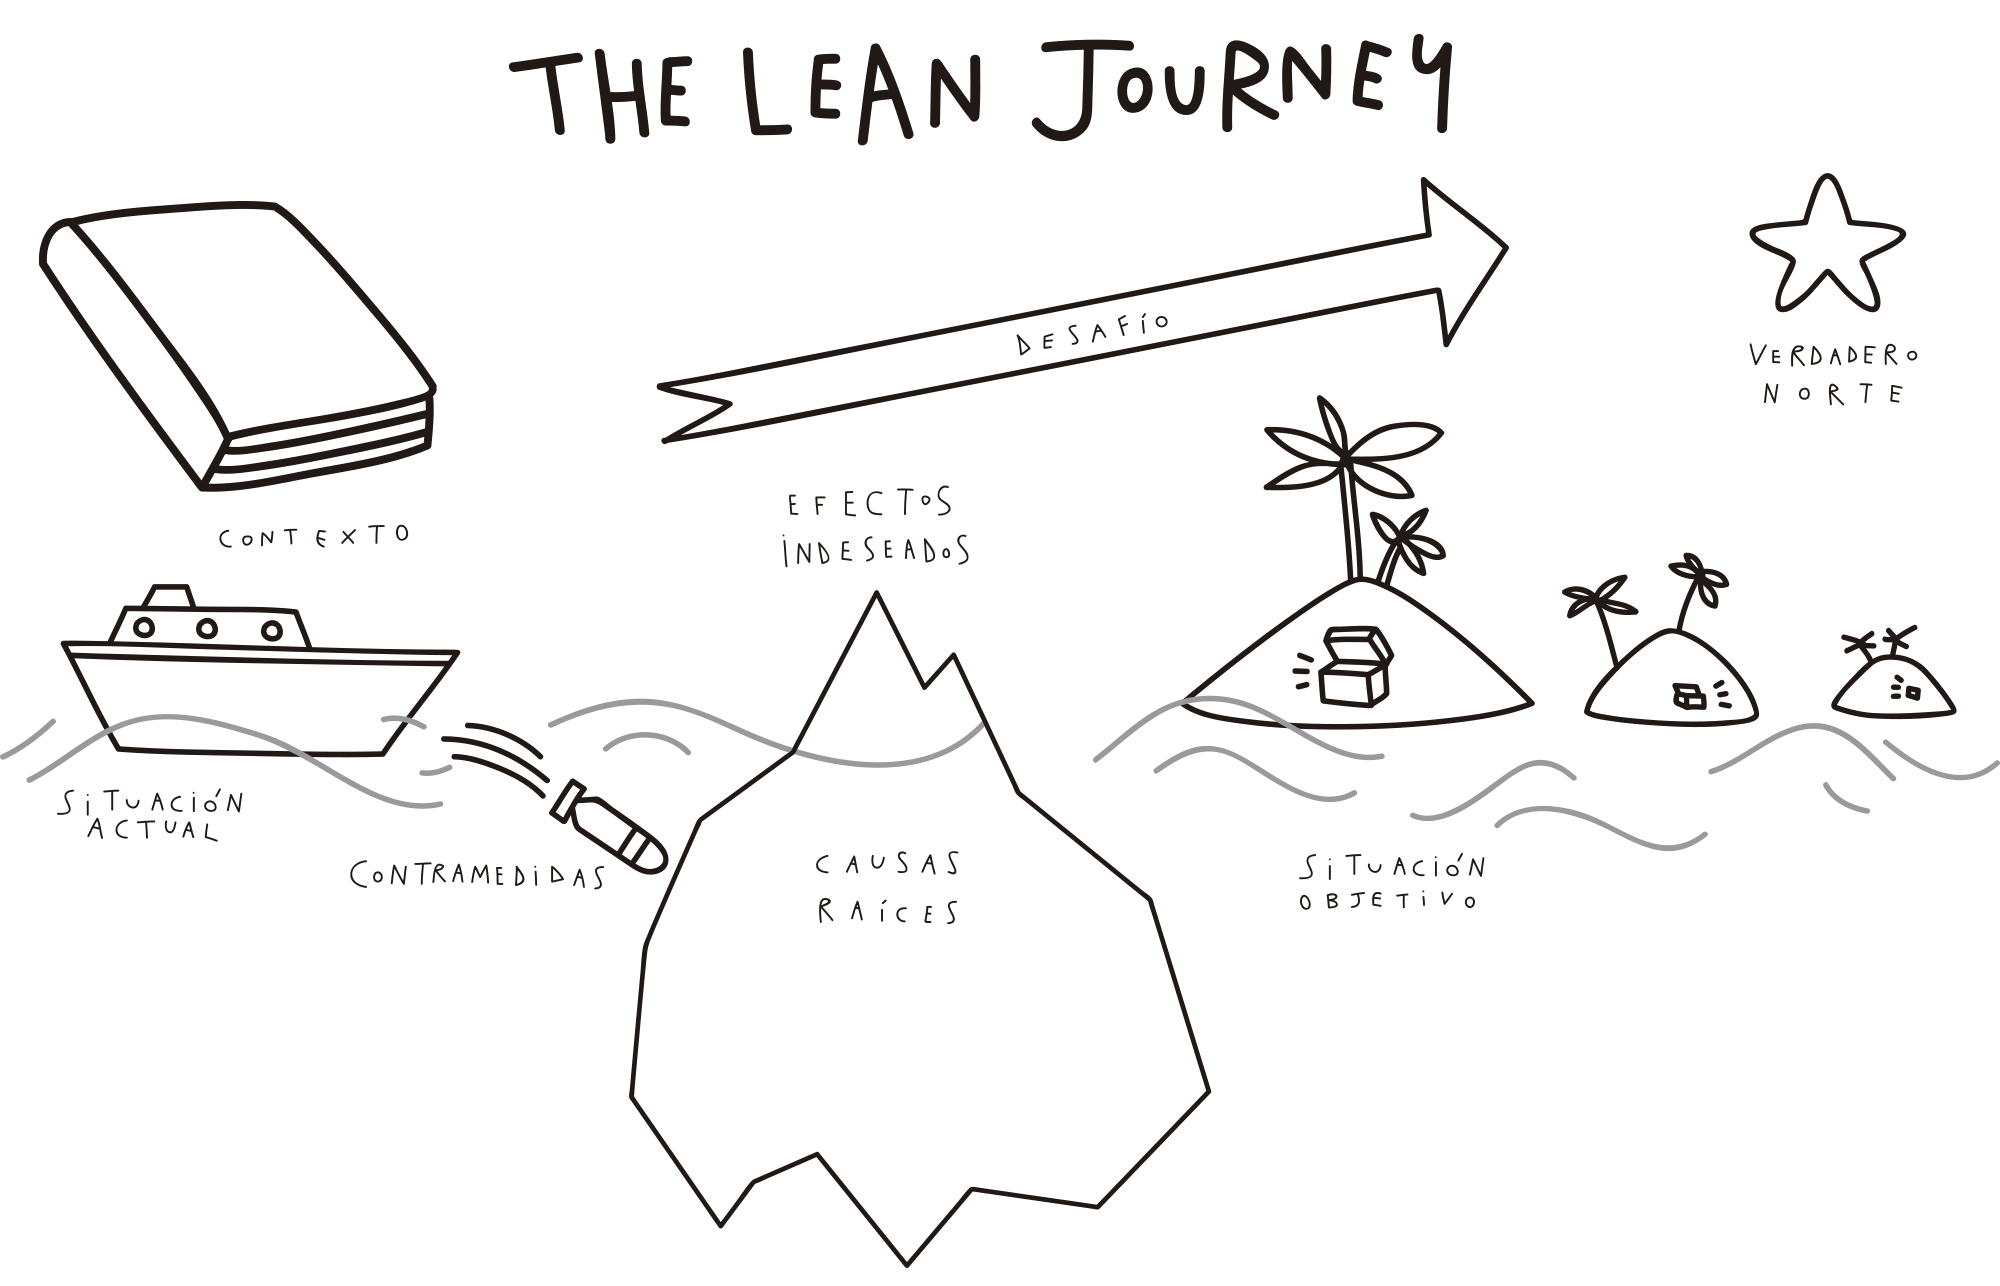 The Lean Journey Canvas